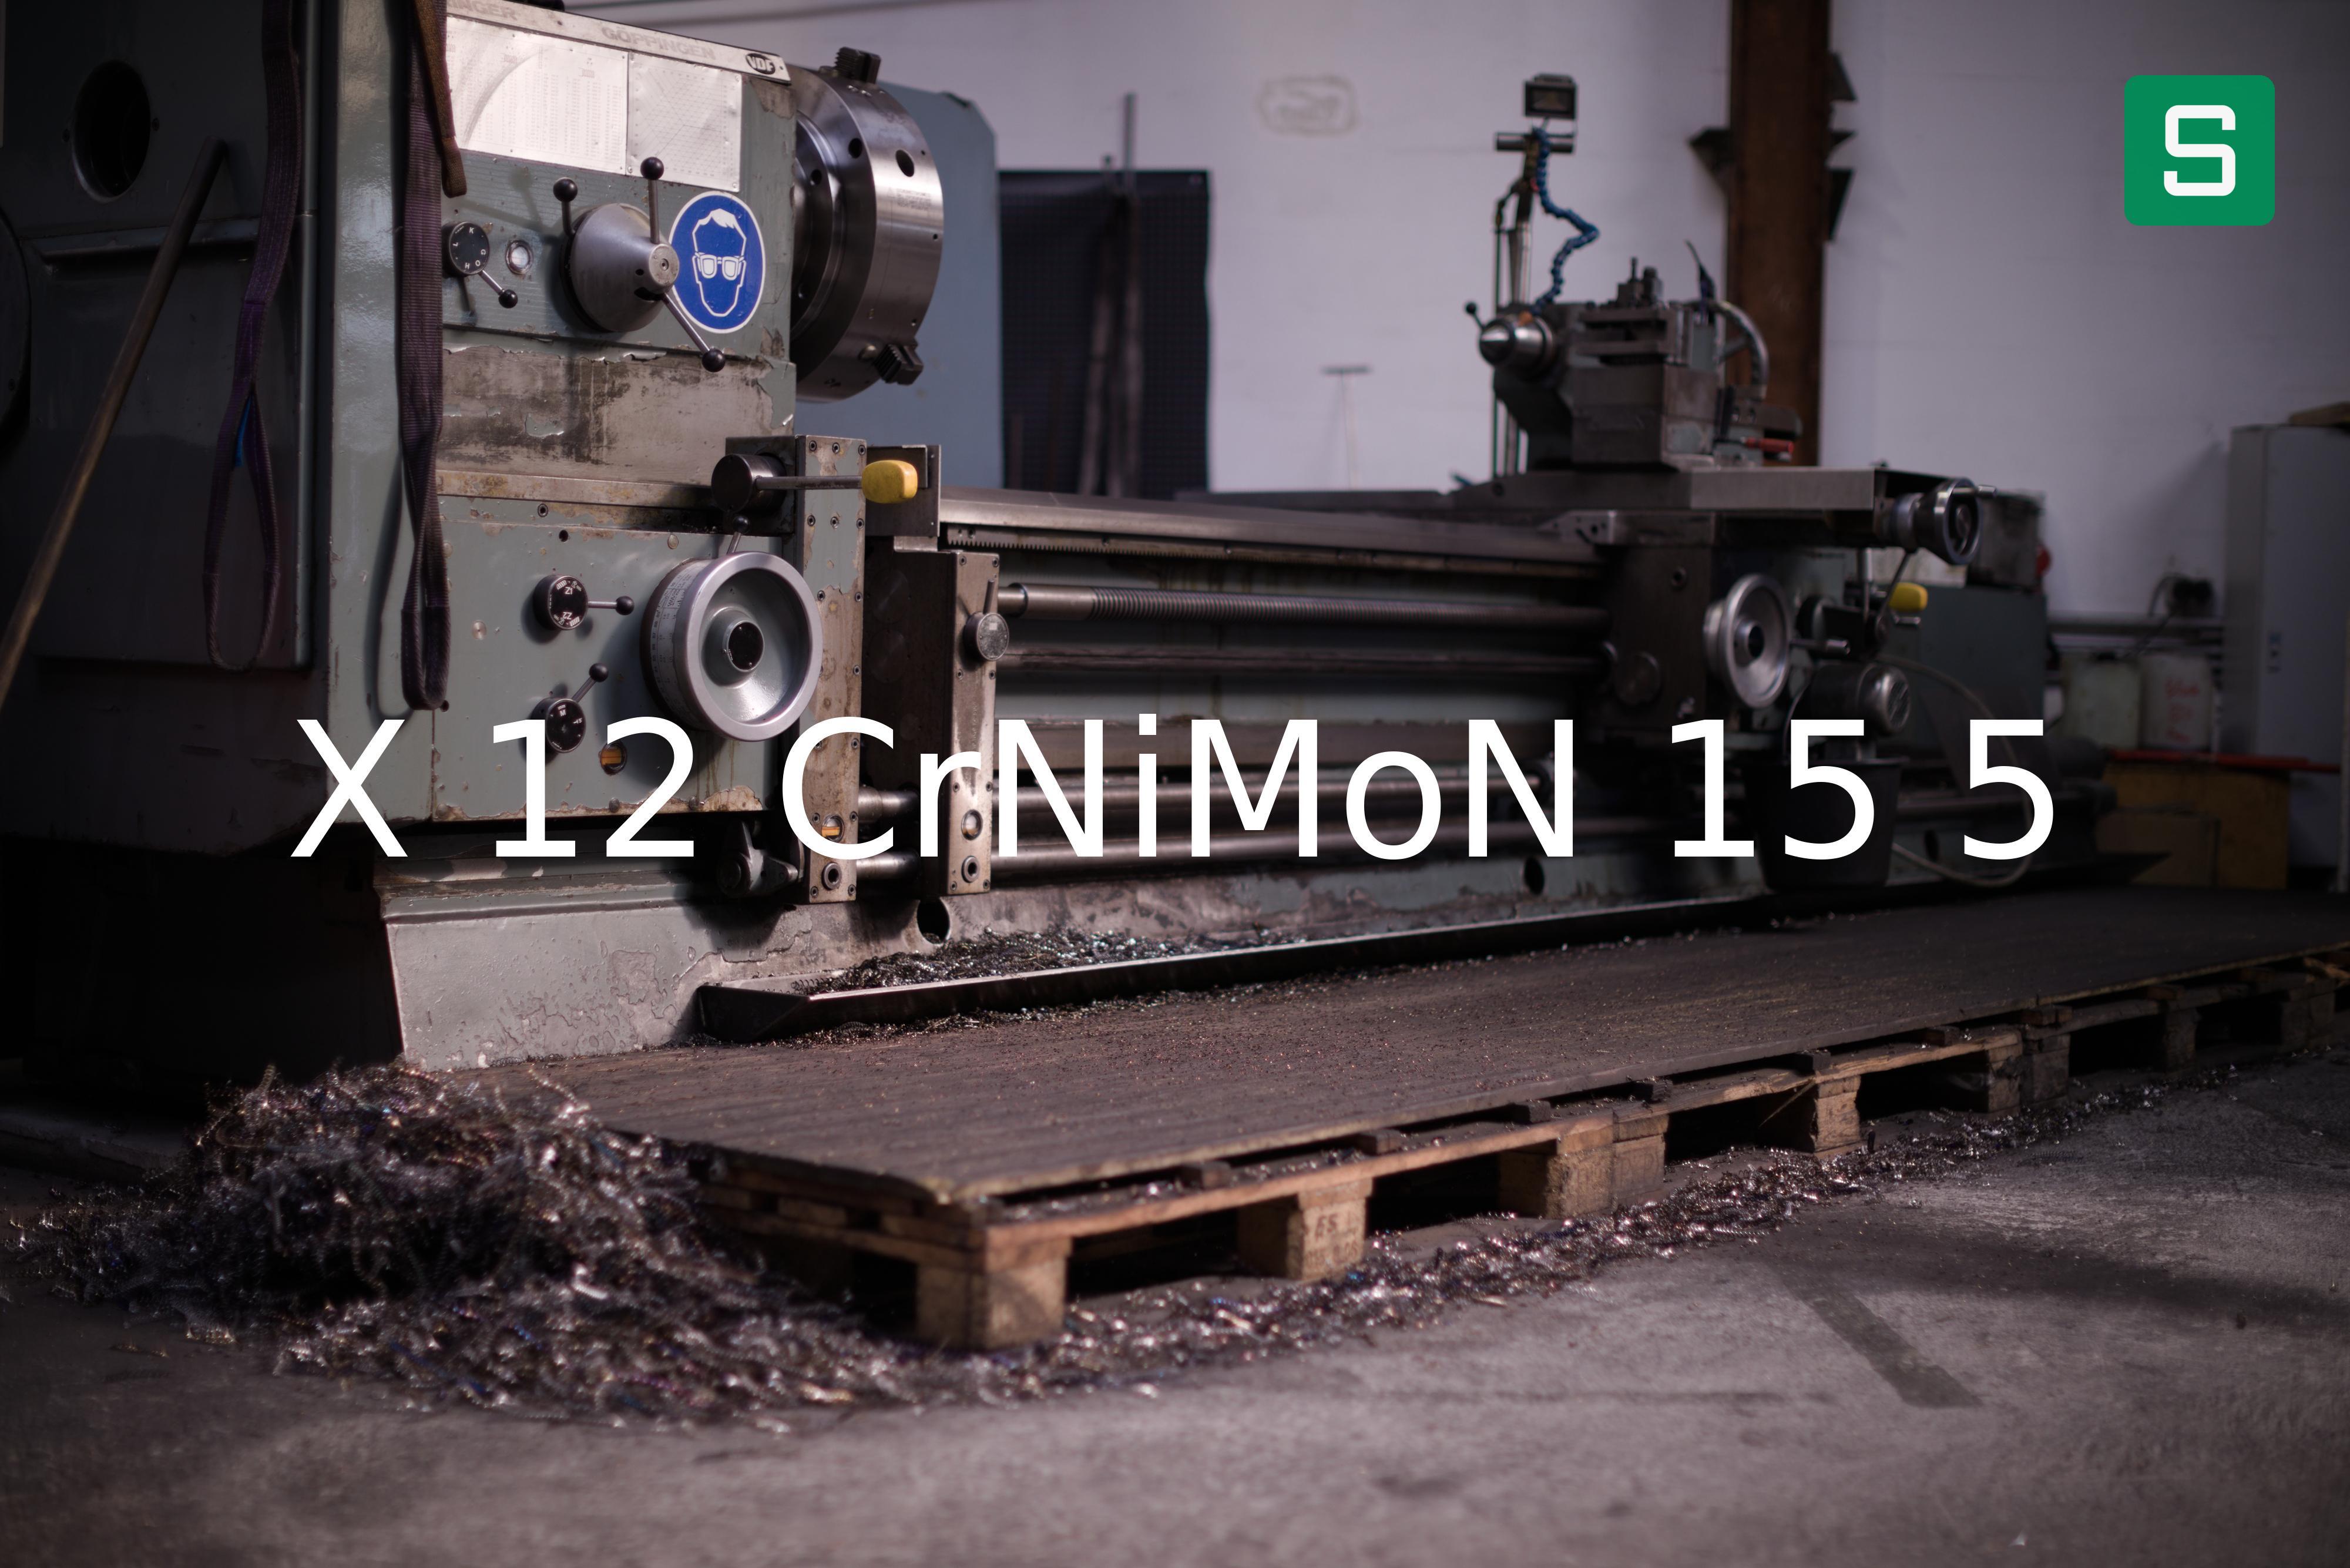 Steel Material: X 12 CrNiMoN 15 5